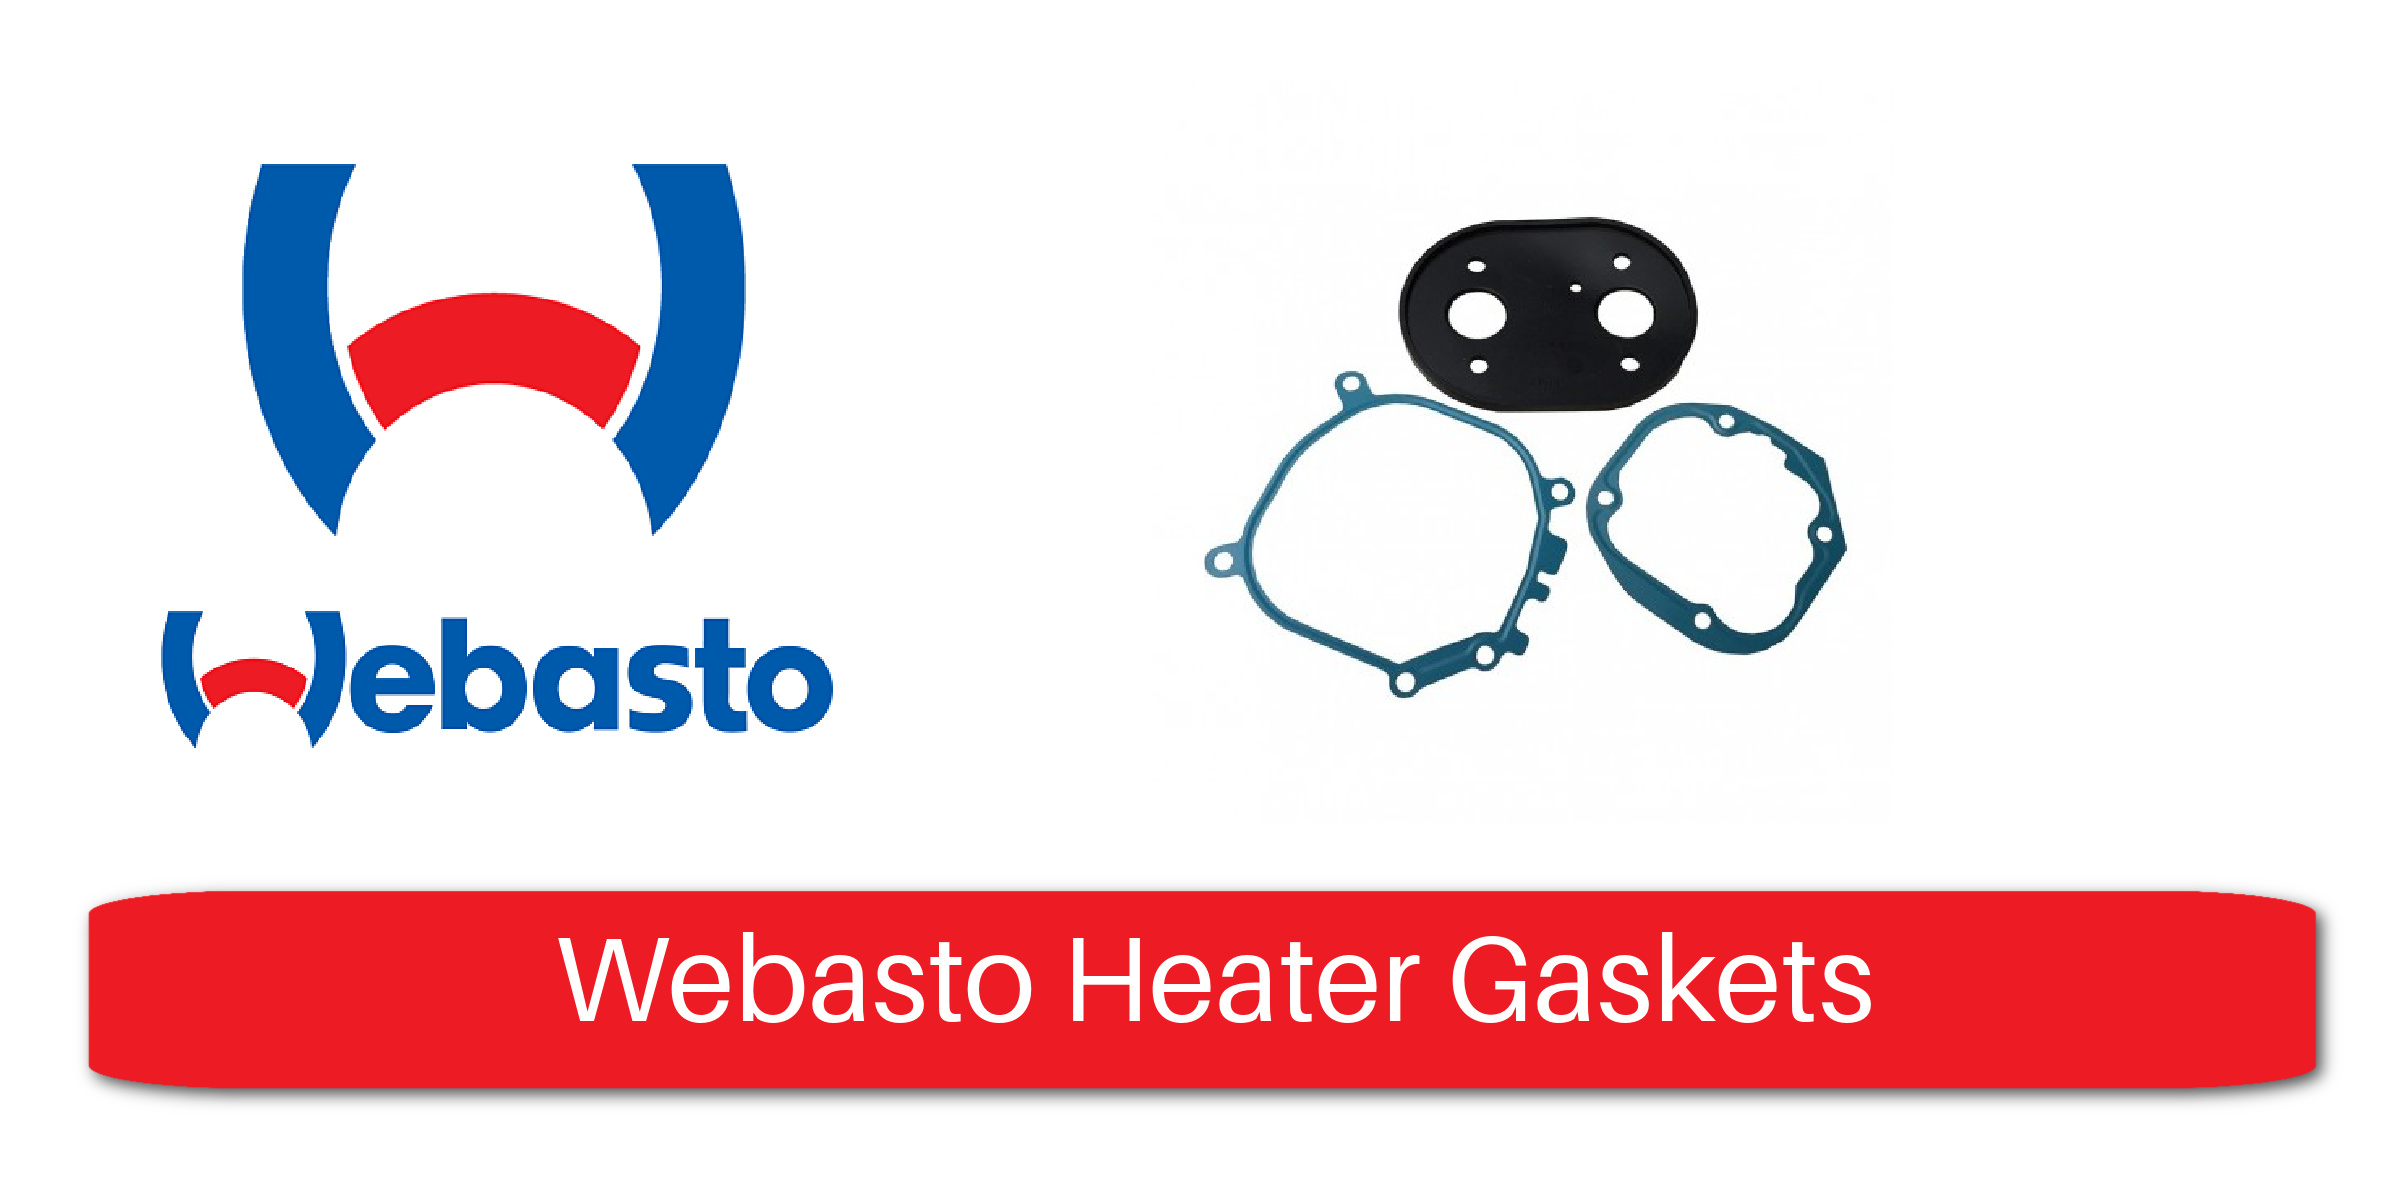 Webasto Heater Gaskets